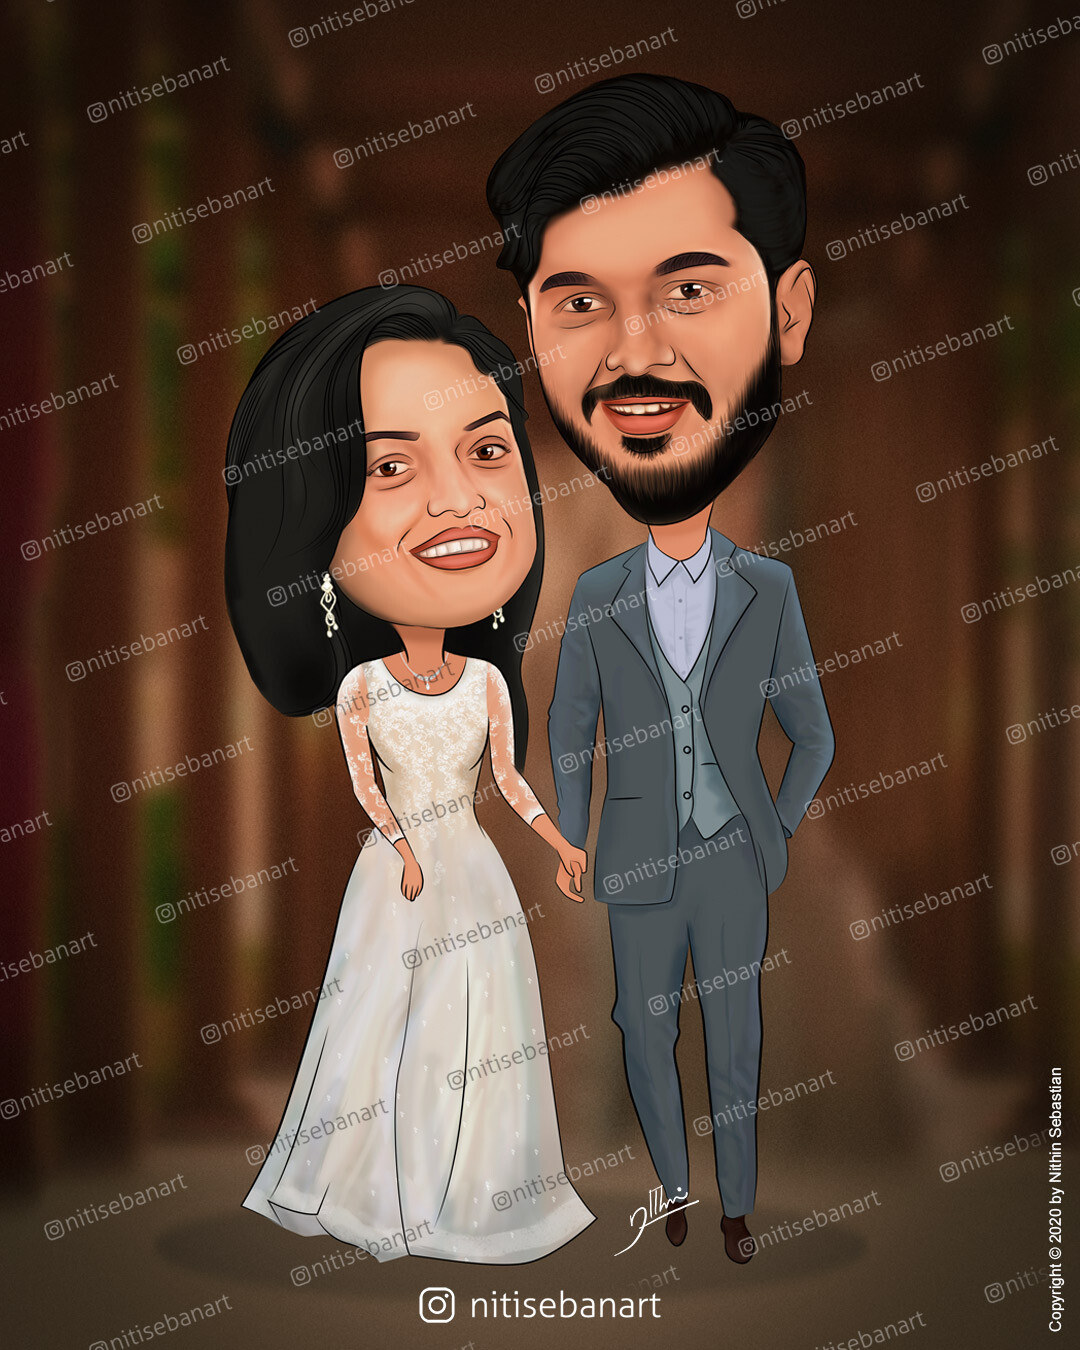 nithin sebastian - Kerala Wedding caricature